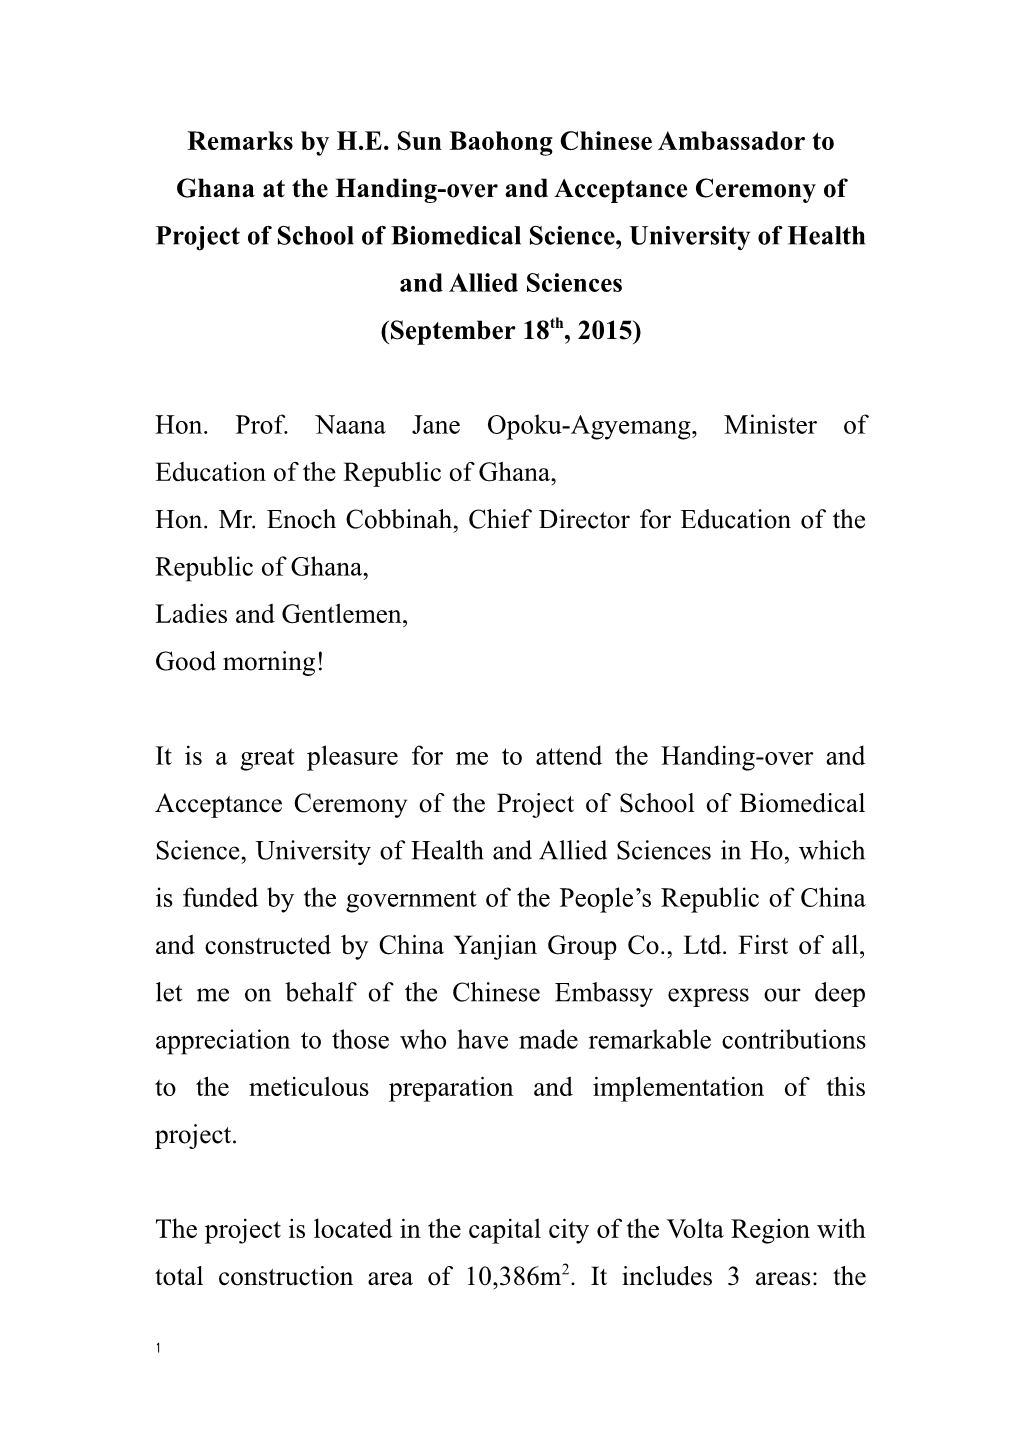 Remarks by H.E. Sun Baohong Chinese Ambassador to Ghana at the Chinese Business Seminar